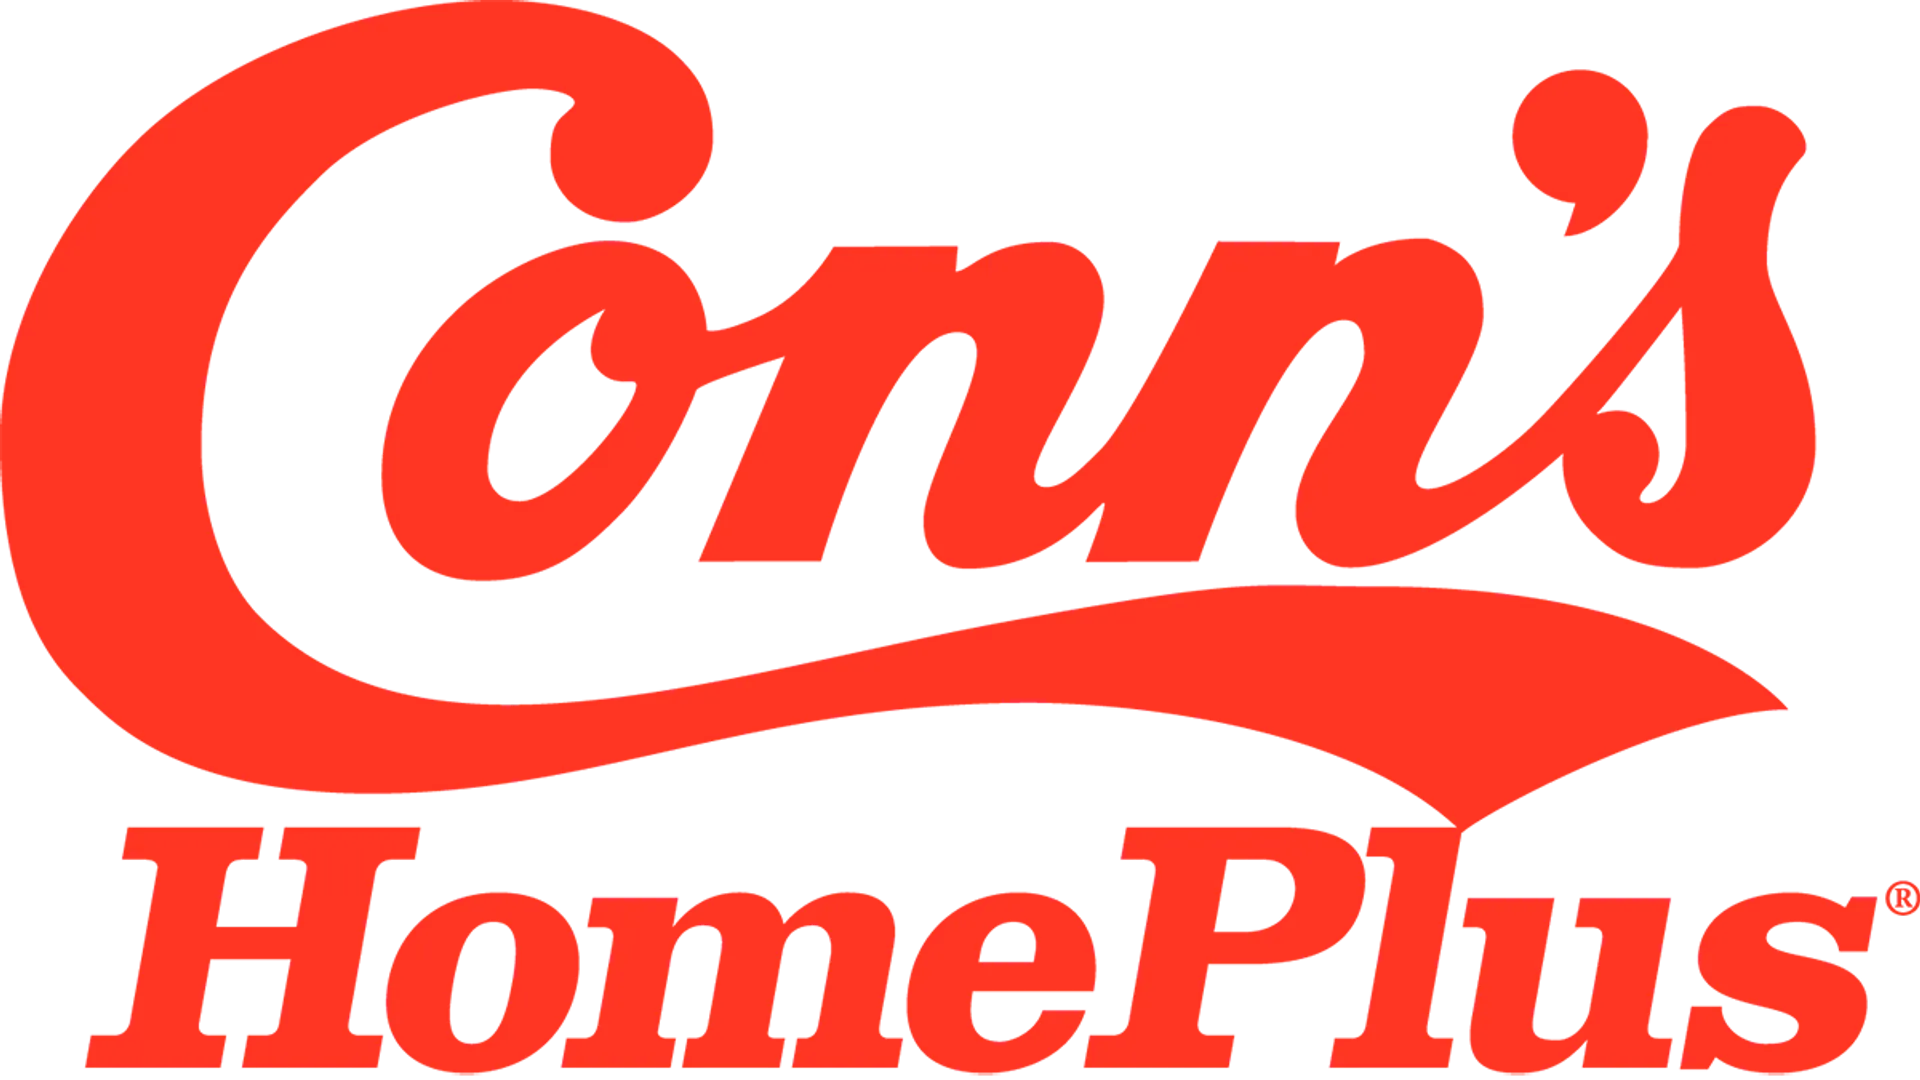 CONN'S HOME PLUS logo de catálogo